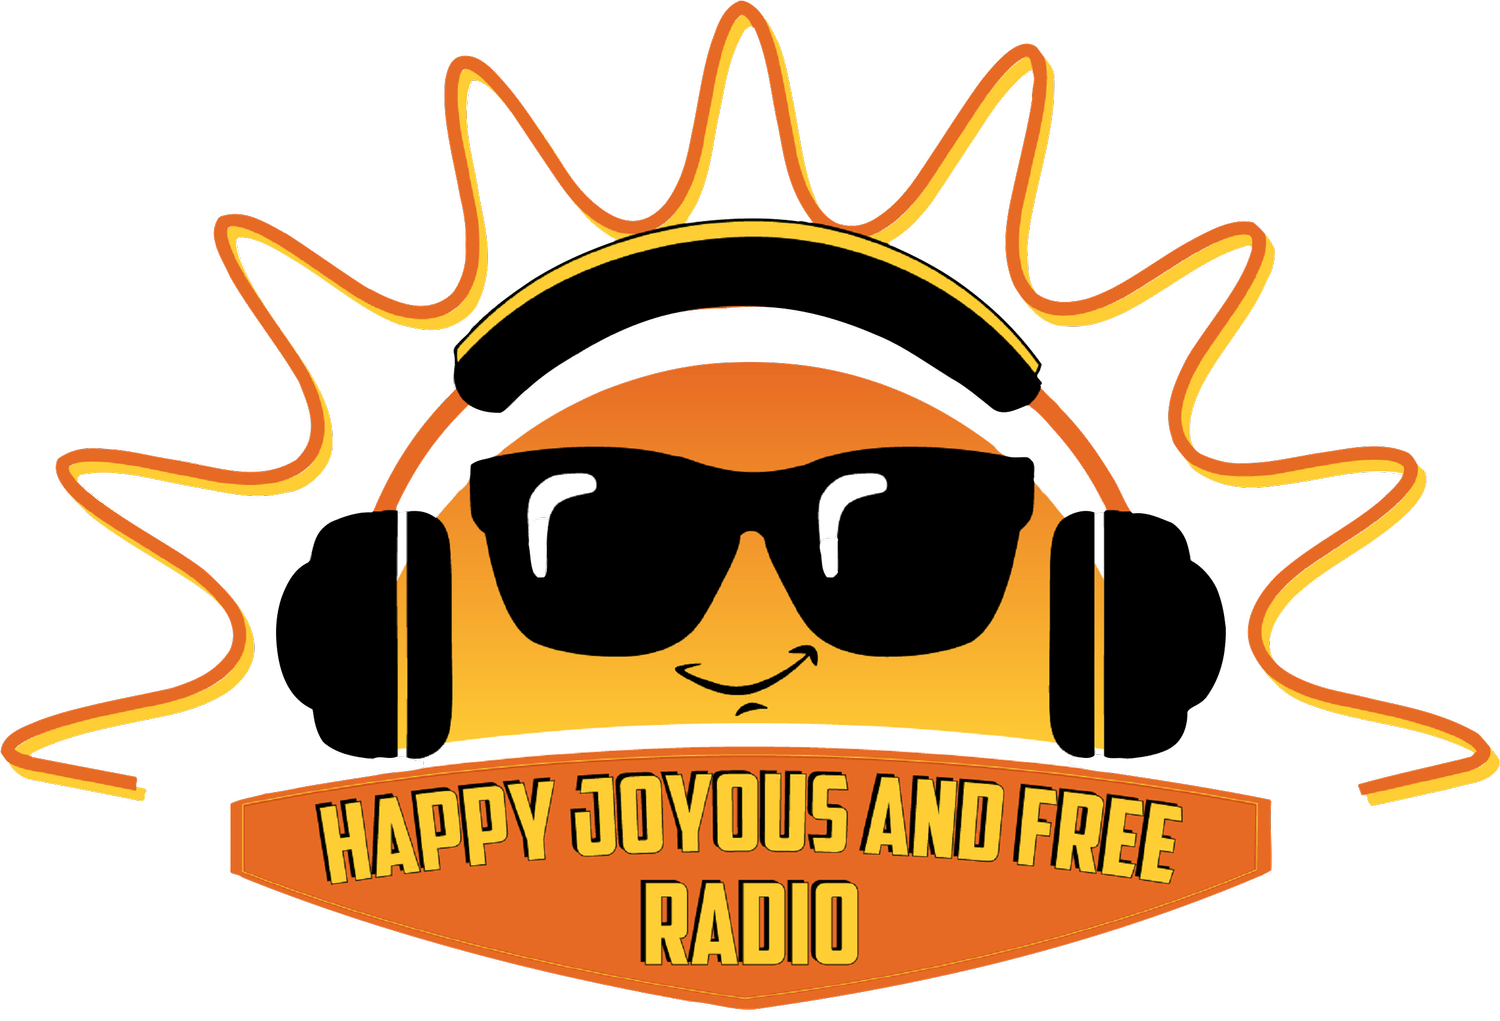 HAPPY JOYOUS AND FREE RADIO